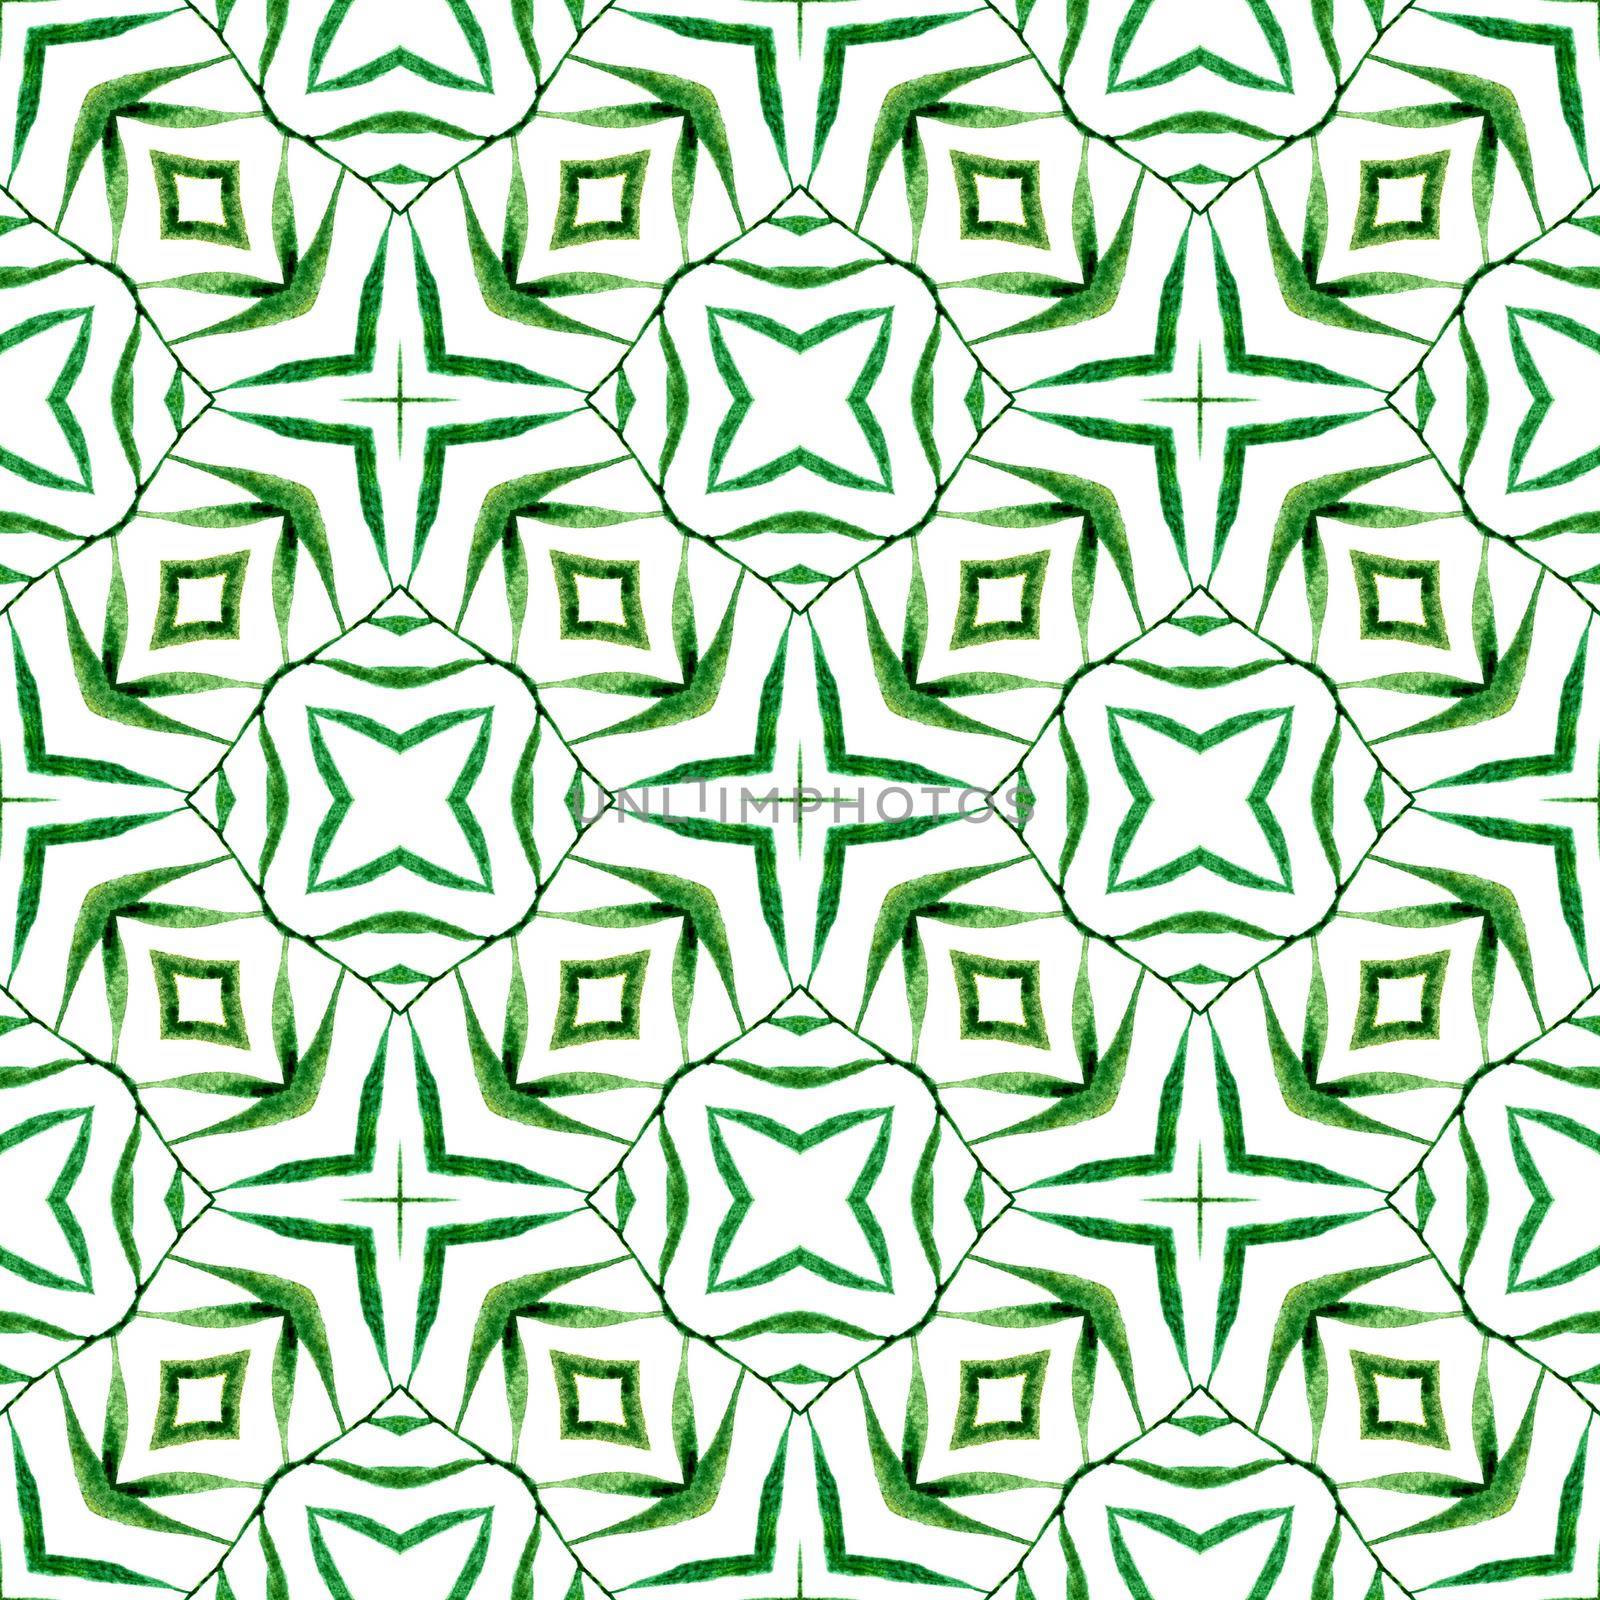 Trendy organic green border. Green classy boho chic summer design. Organic tile. Textile ready modern print, swimwear fabric, wallpaper, wrapping.